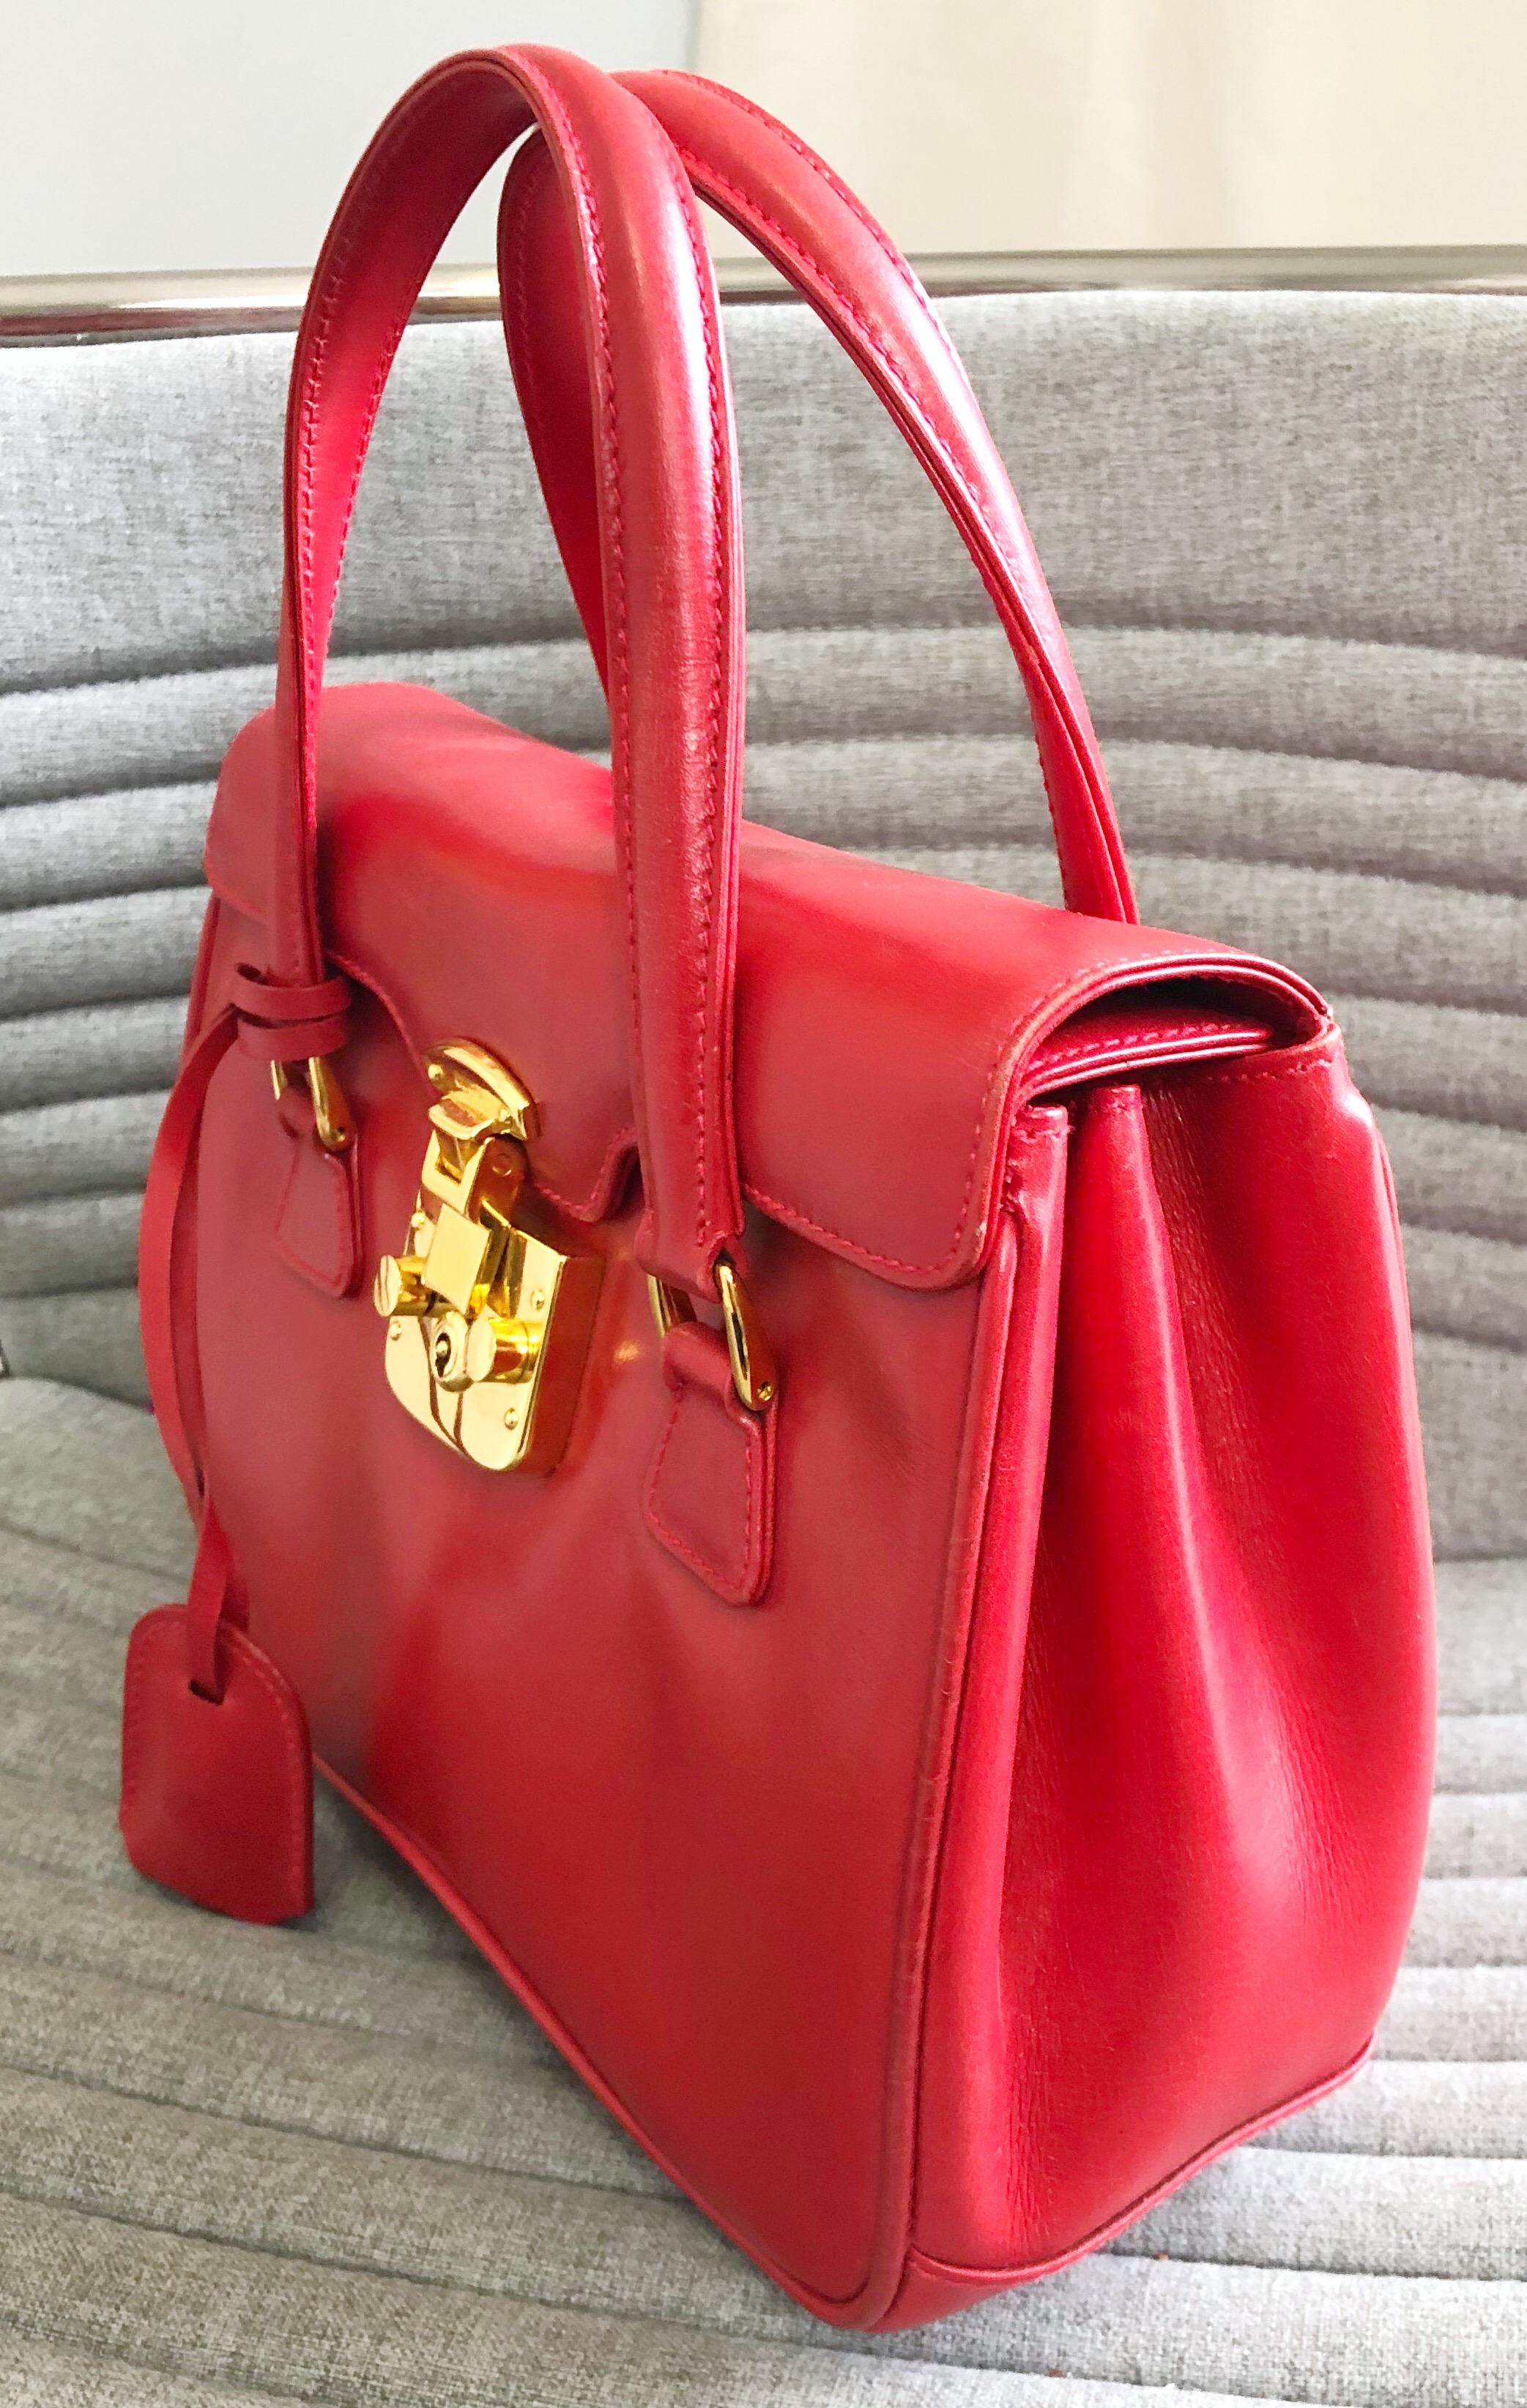 Gucci 1990s Lipstick Red Leather Vintage 90s Purse Handbag Satchel Bag 2